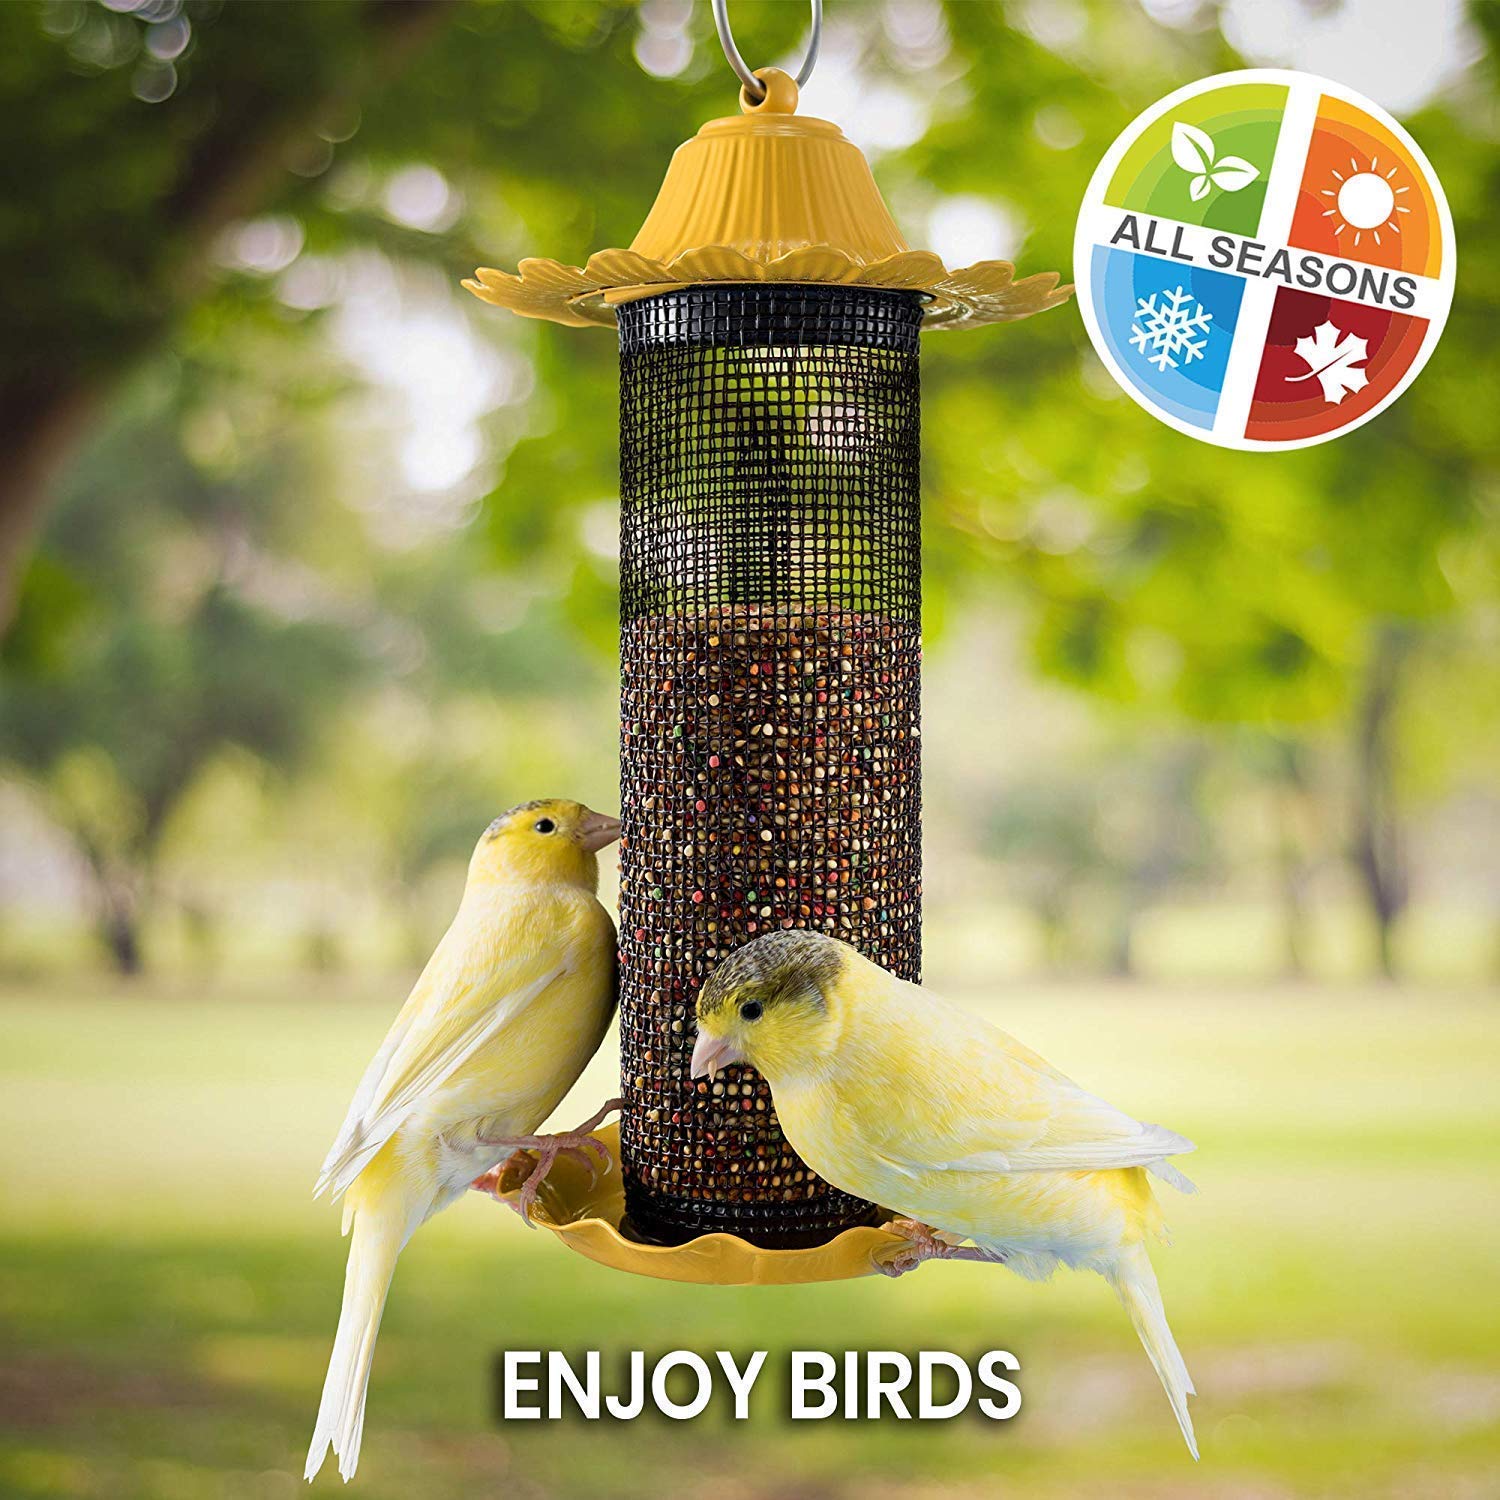 Finch Bird Feeders for Outside [Set of 2] 0.5 LB Capacity Yellow Wild Bird Feeders, Seeds Attracts Small Birds to Backyard & Garden. Tube Bird Feeders for Outdoors.  - Acceptable